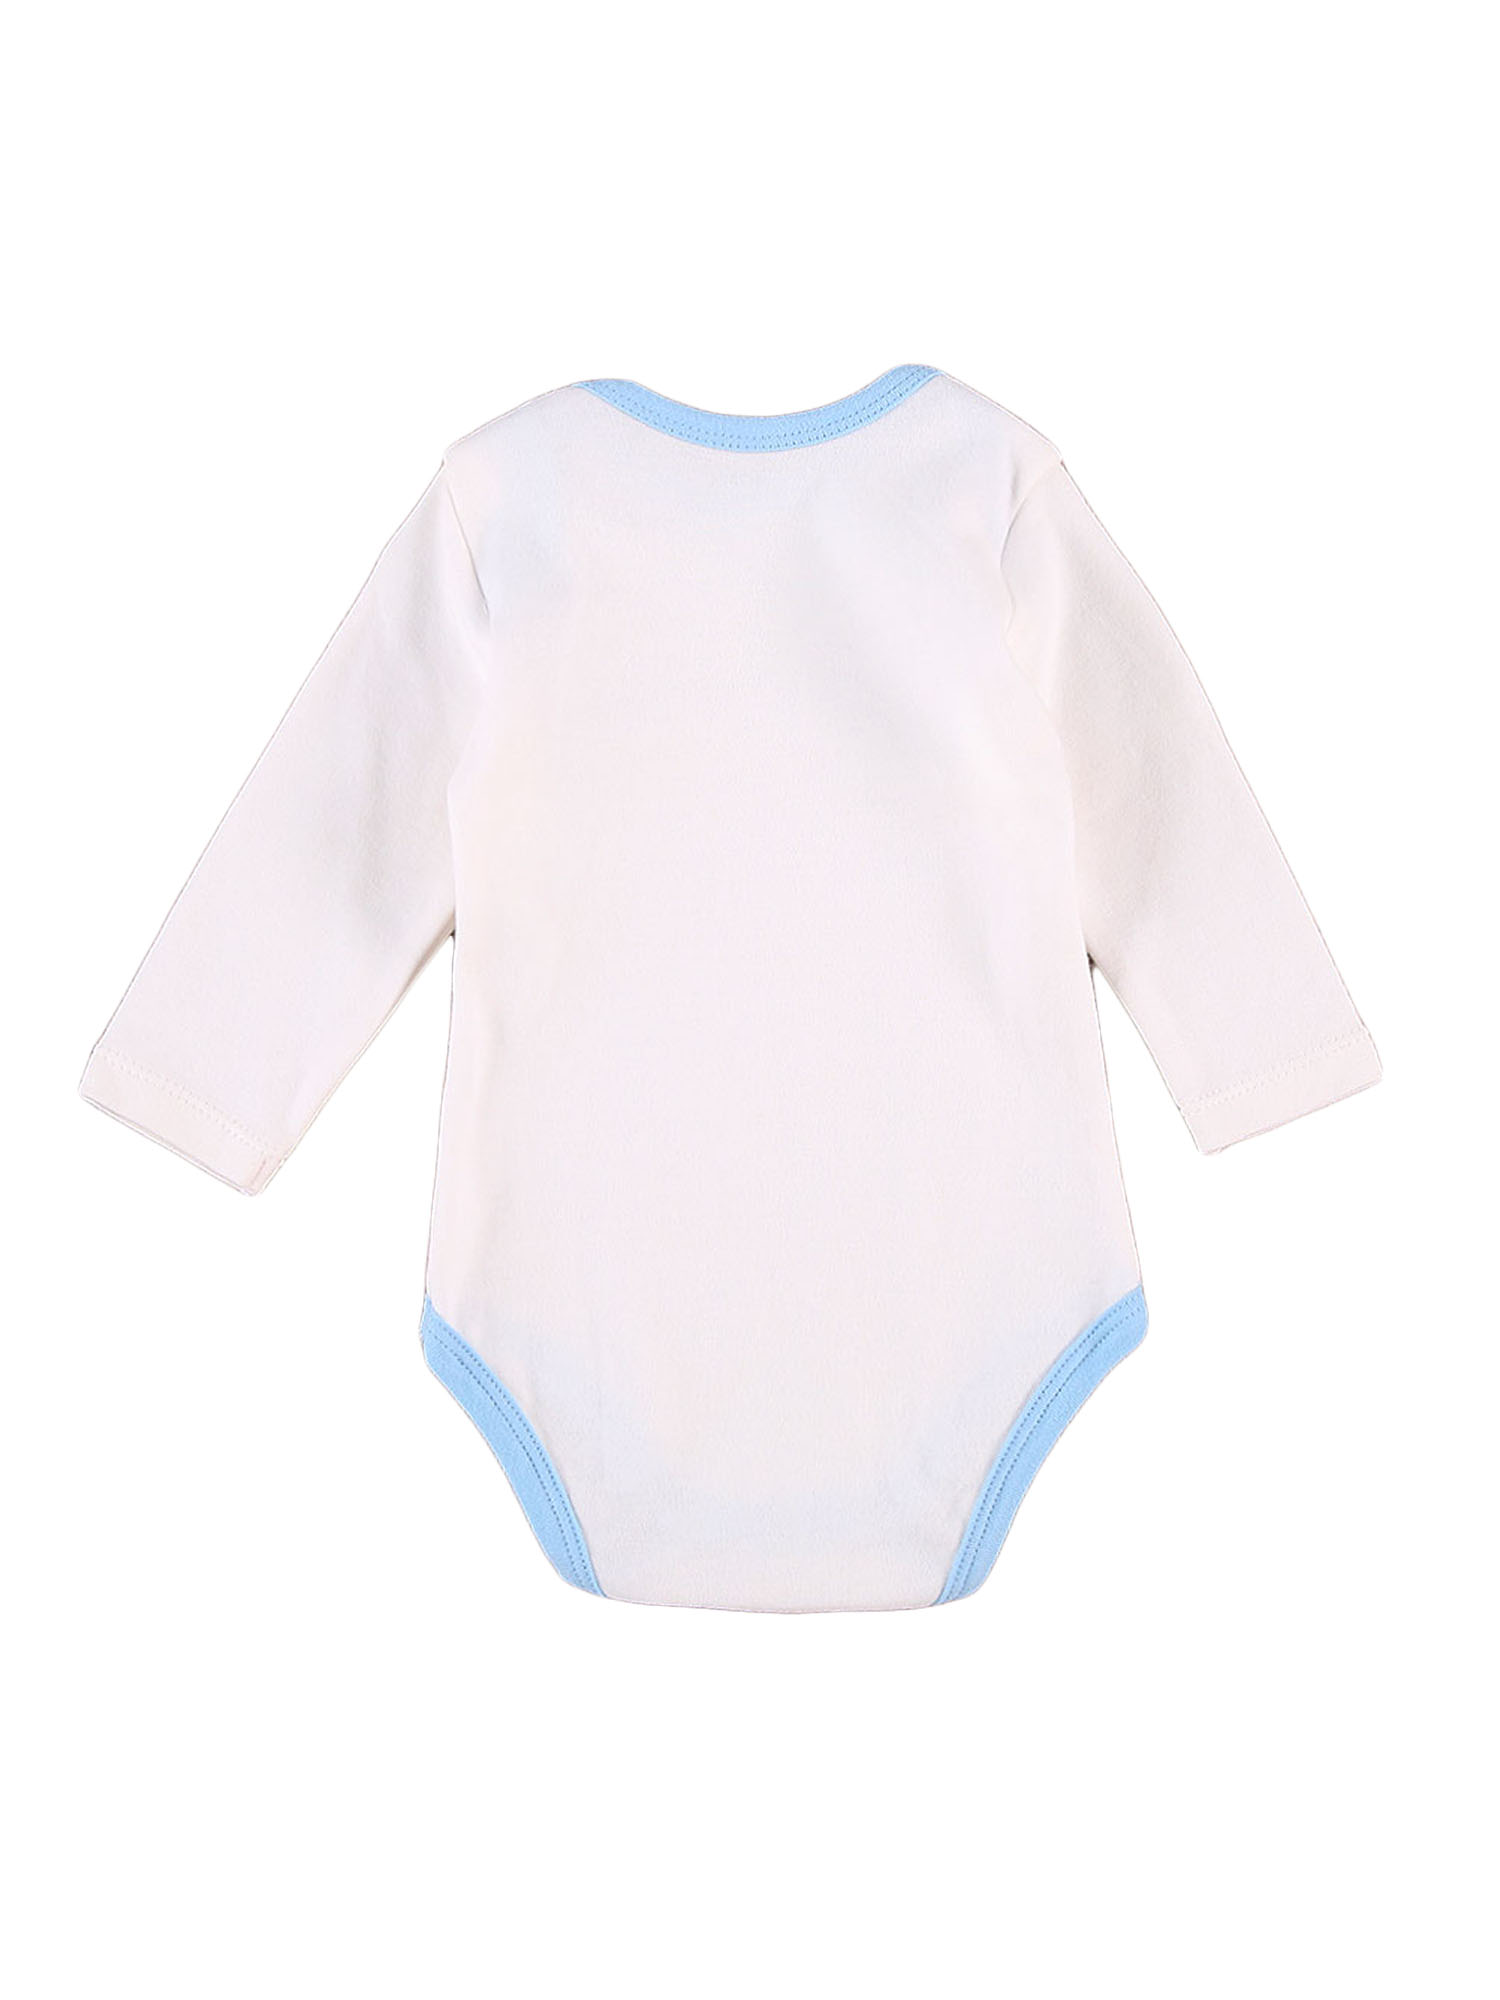 ✿-LZZ-✿-Baby Spring & Fall Romper, Patchwork Long Sleeve Envelope Neckline Romper, Button Closure One-piece Jumpsuit, 0-18 Months